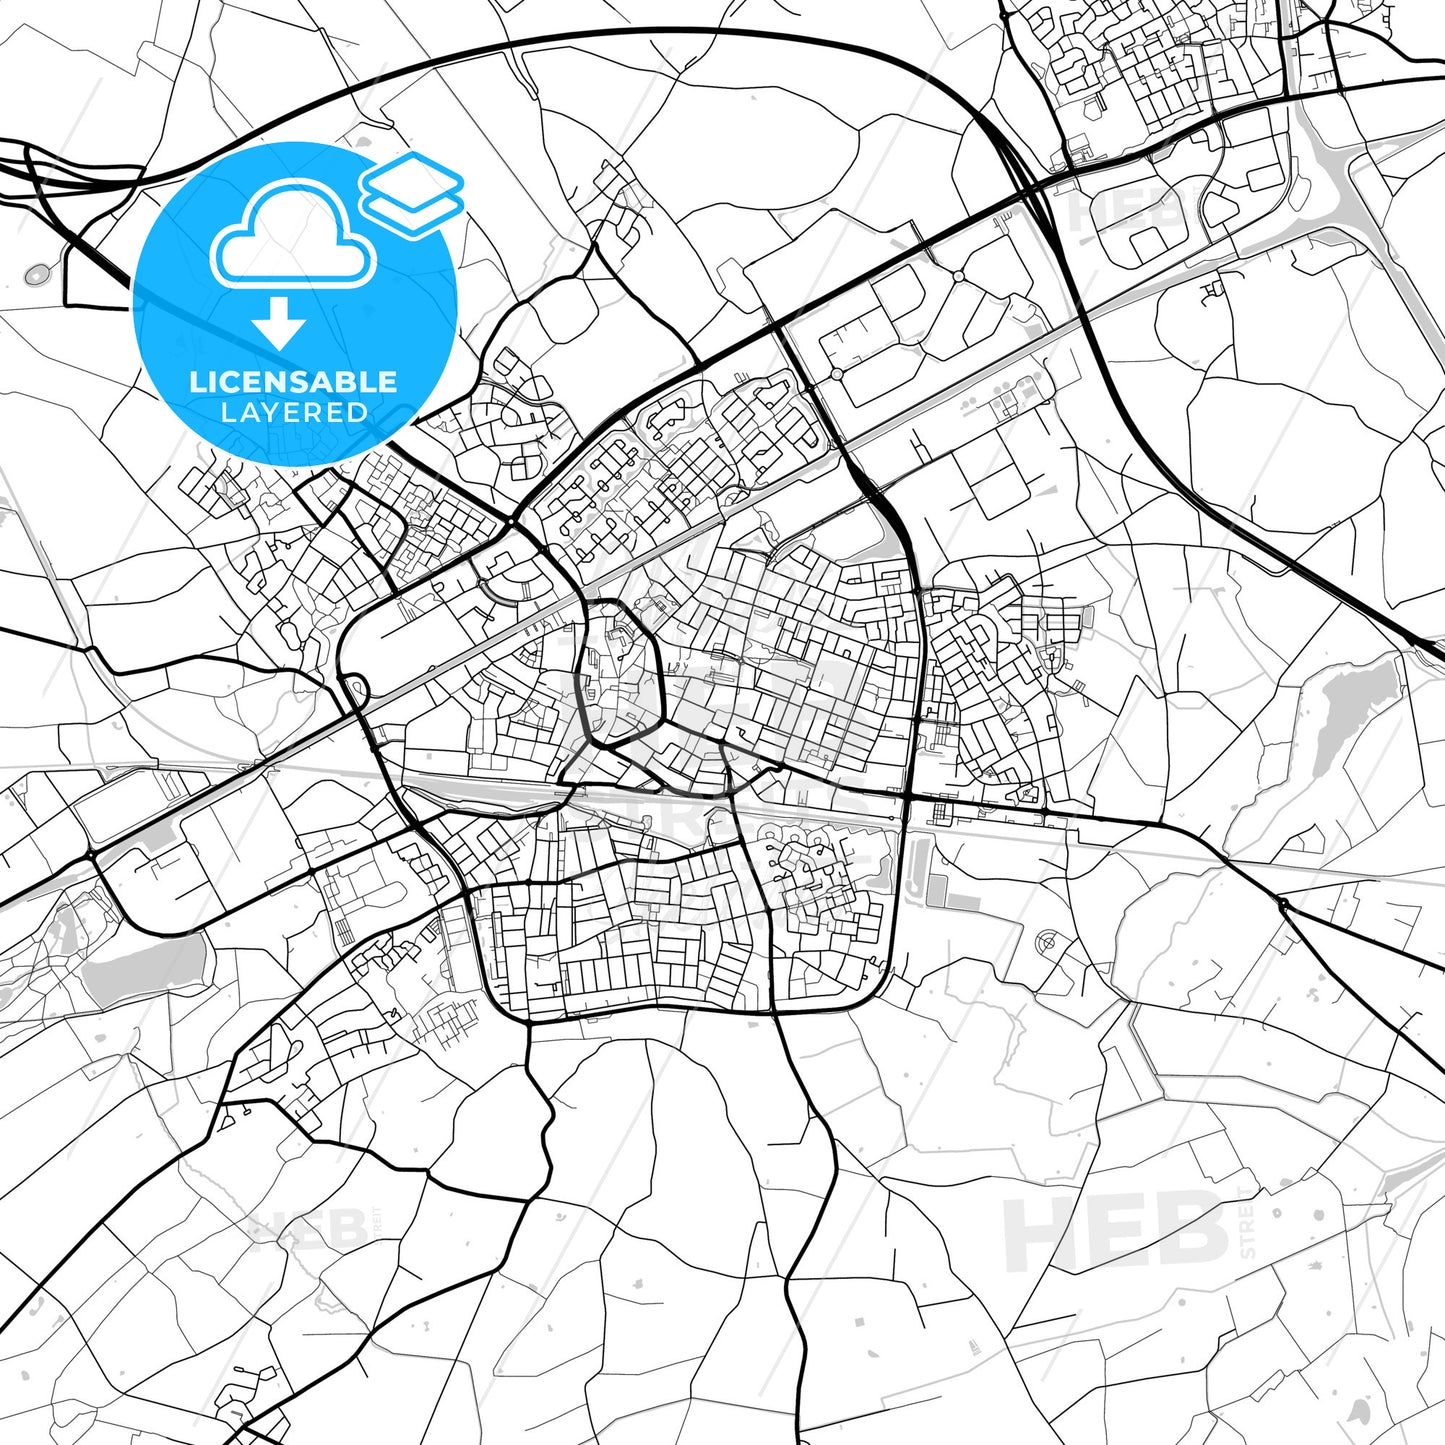 Layered PDF map of Weert, Limburg, Netherlands